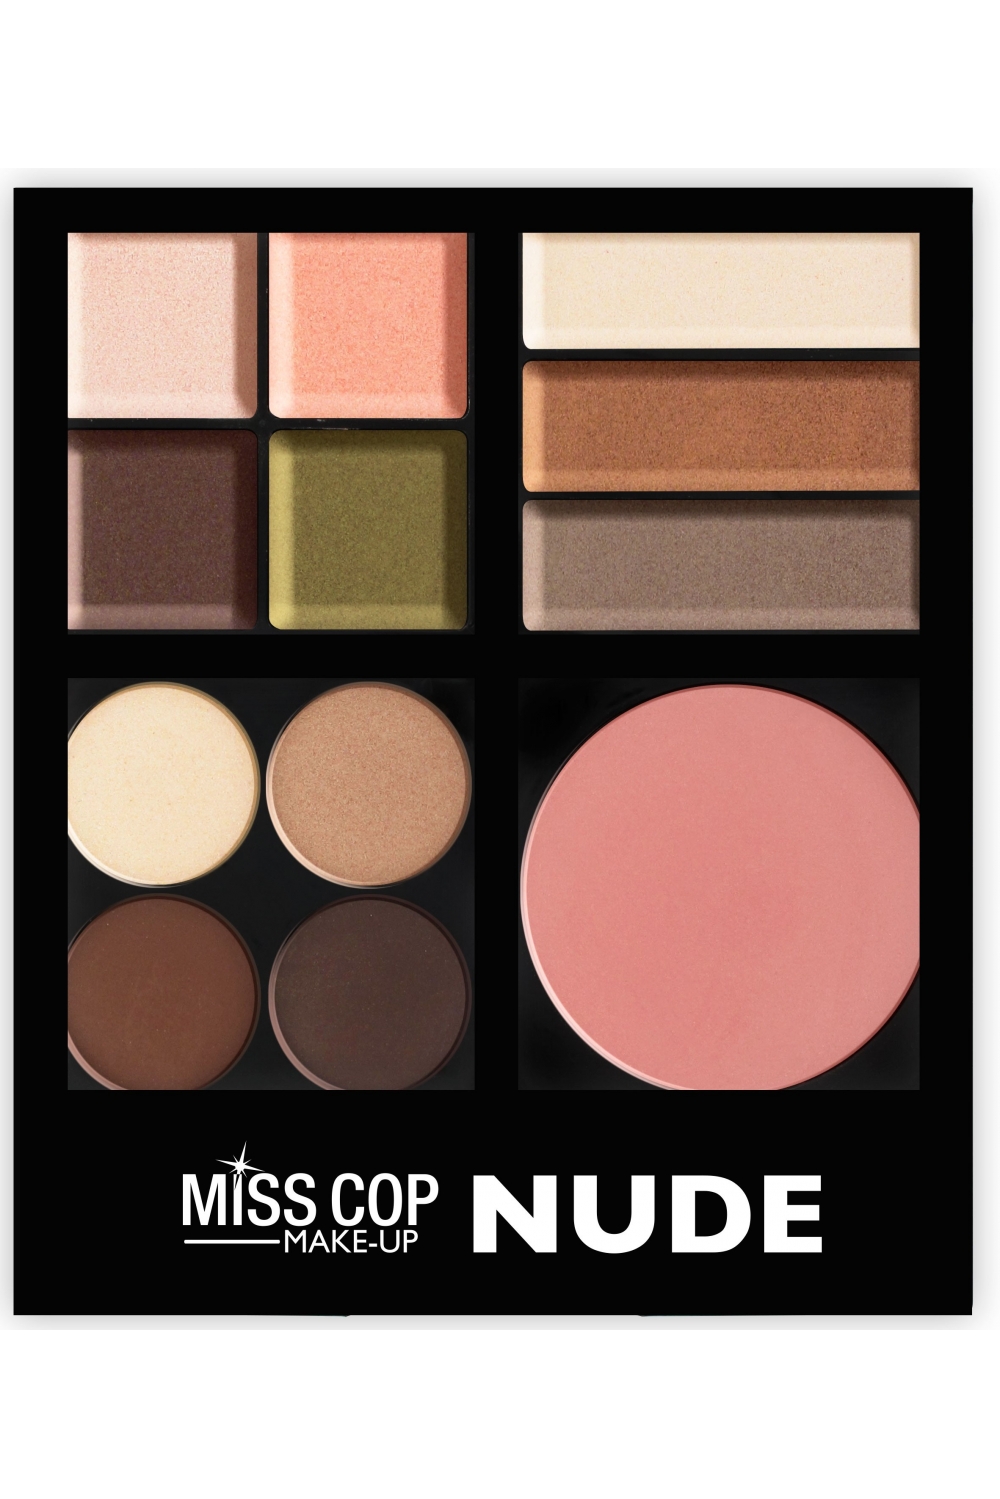 Nude Makeup Palette Misscop